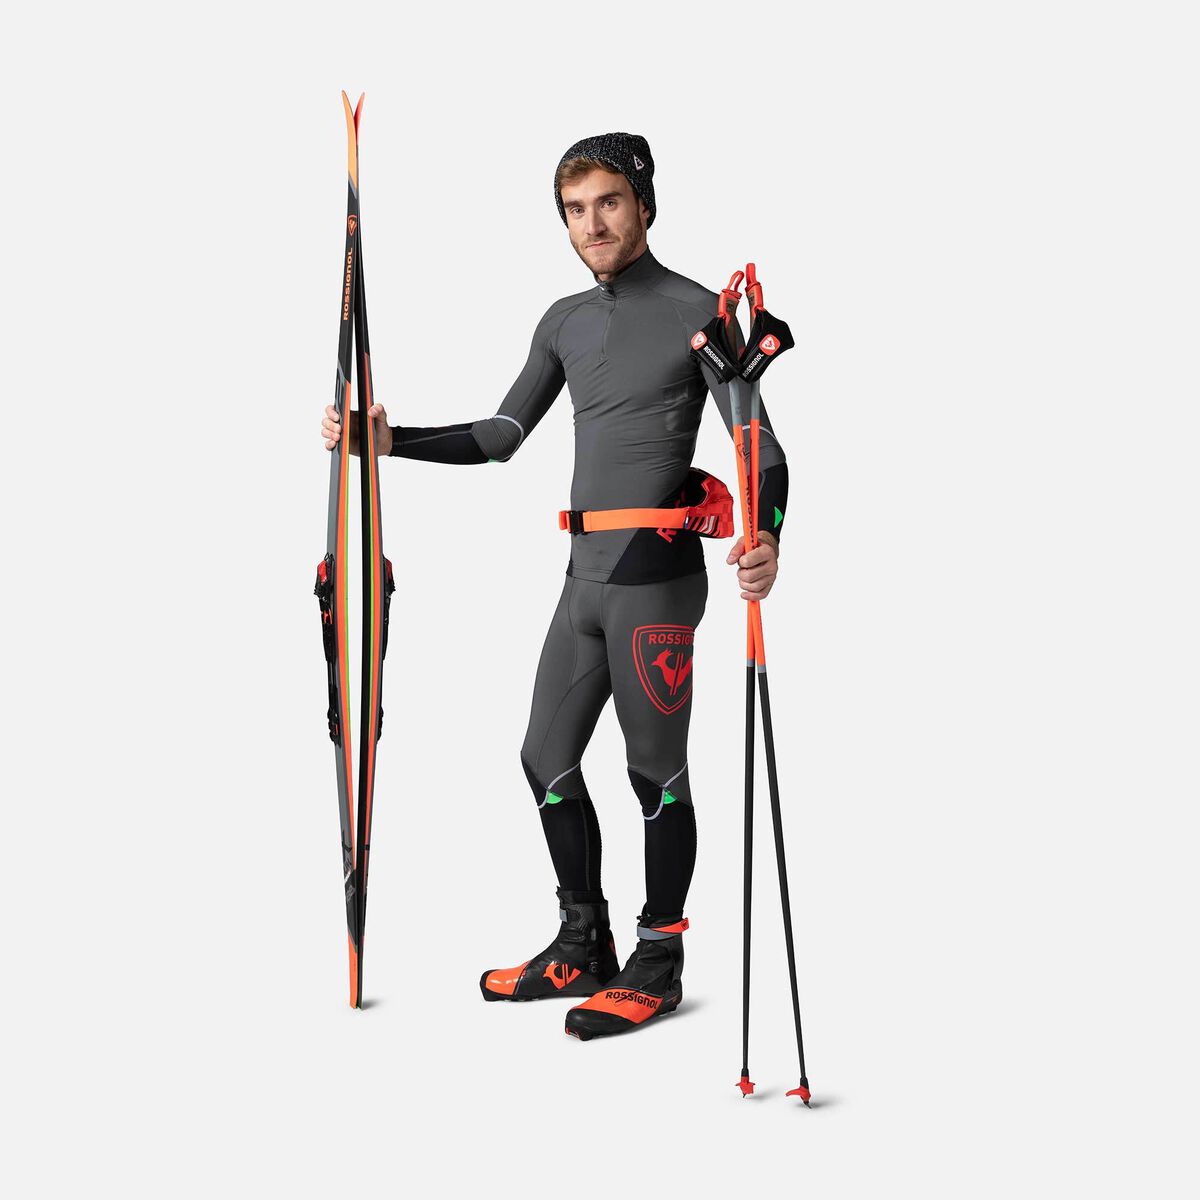 Men's Infini Compression Race Tights, Ski pants